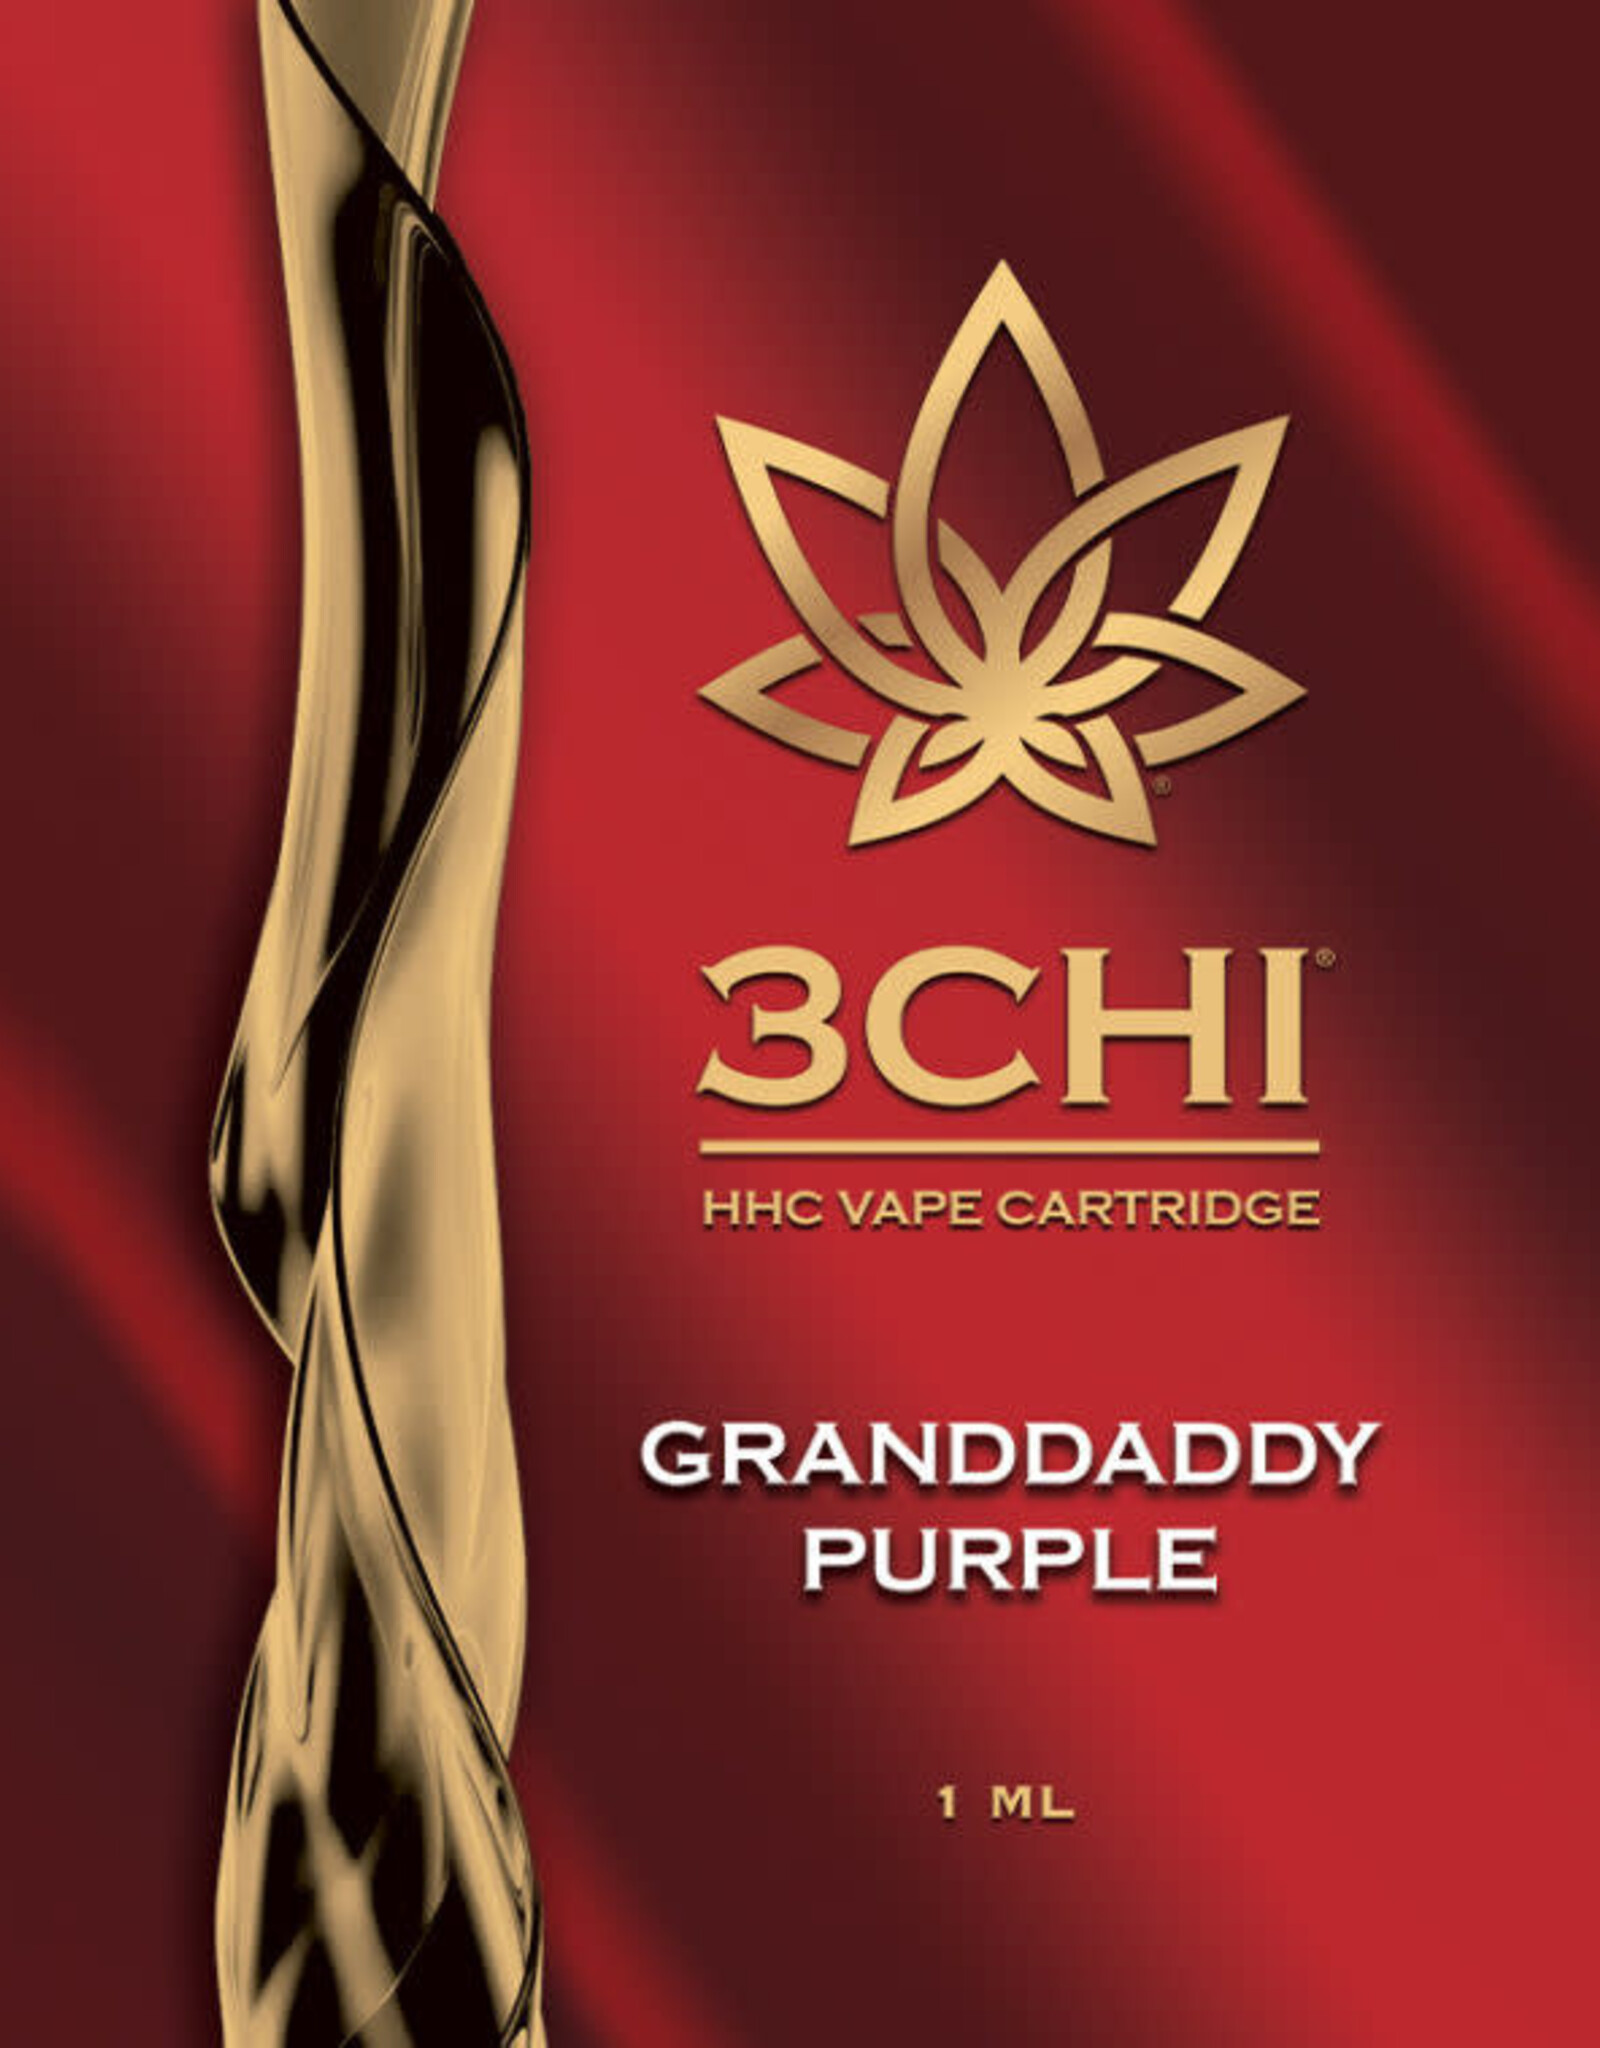 3CHI 3CHI HHC Vape Cartridge- Granddaddy purple